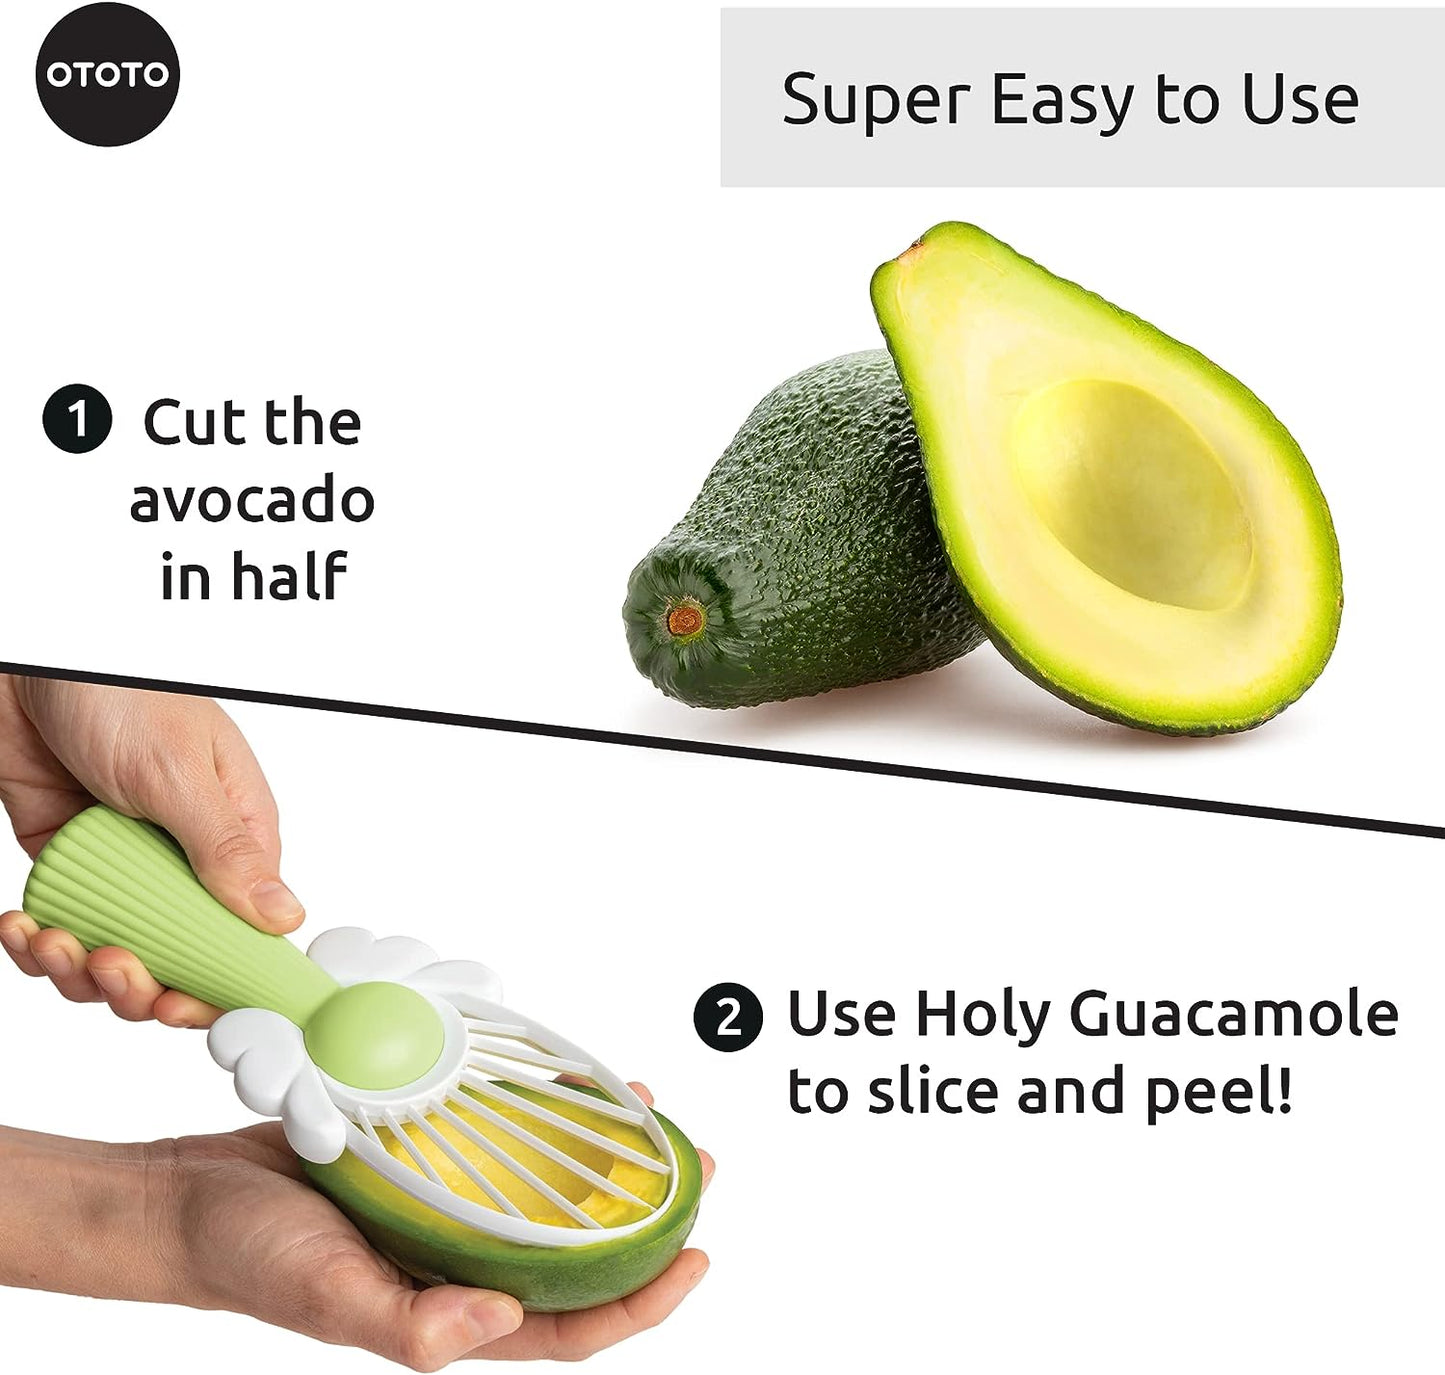 Holy Guacamole Avocado Peeler And Slicer – Blue Seven